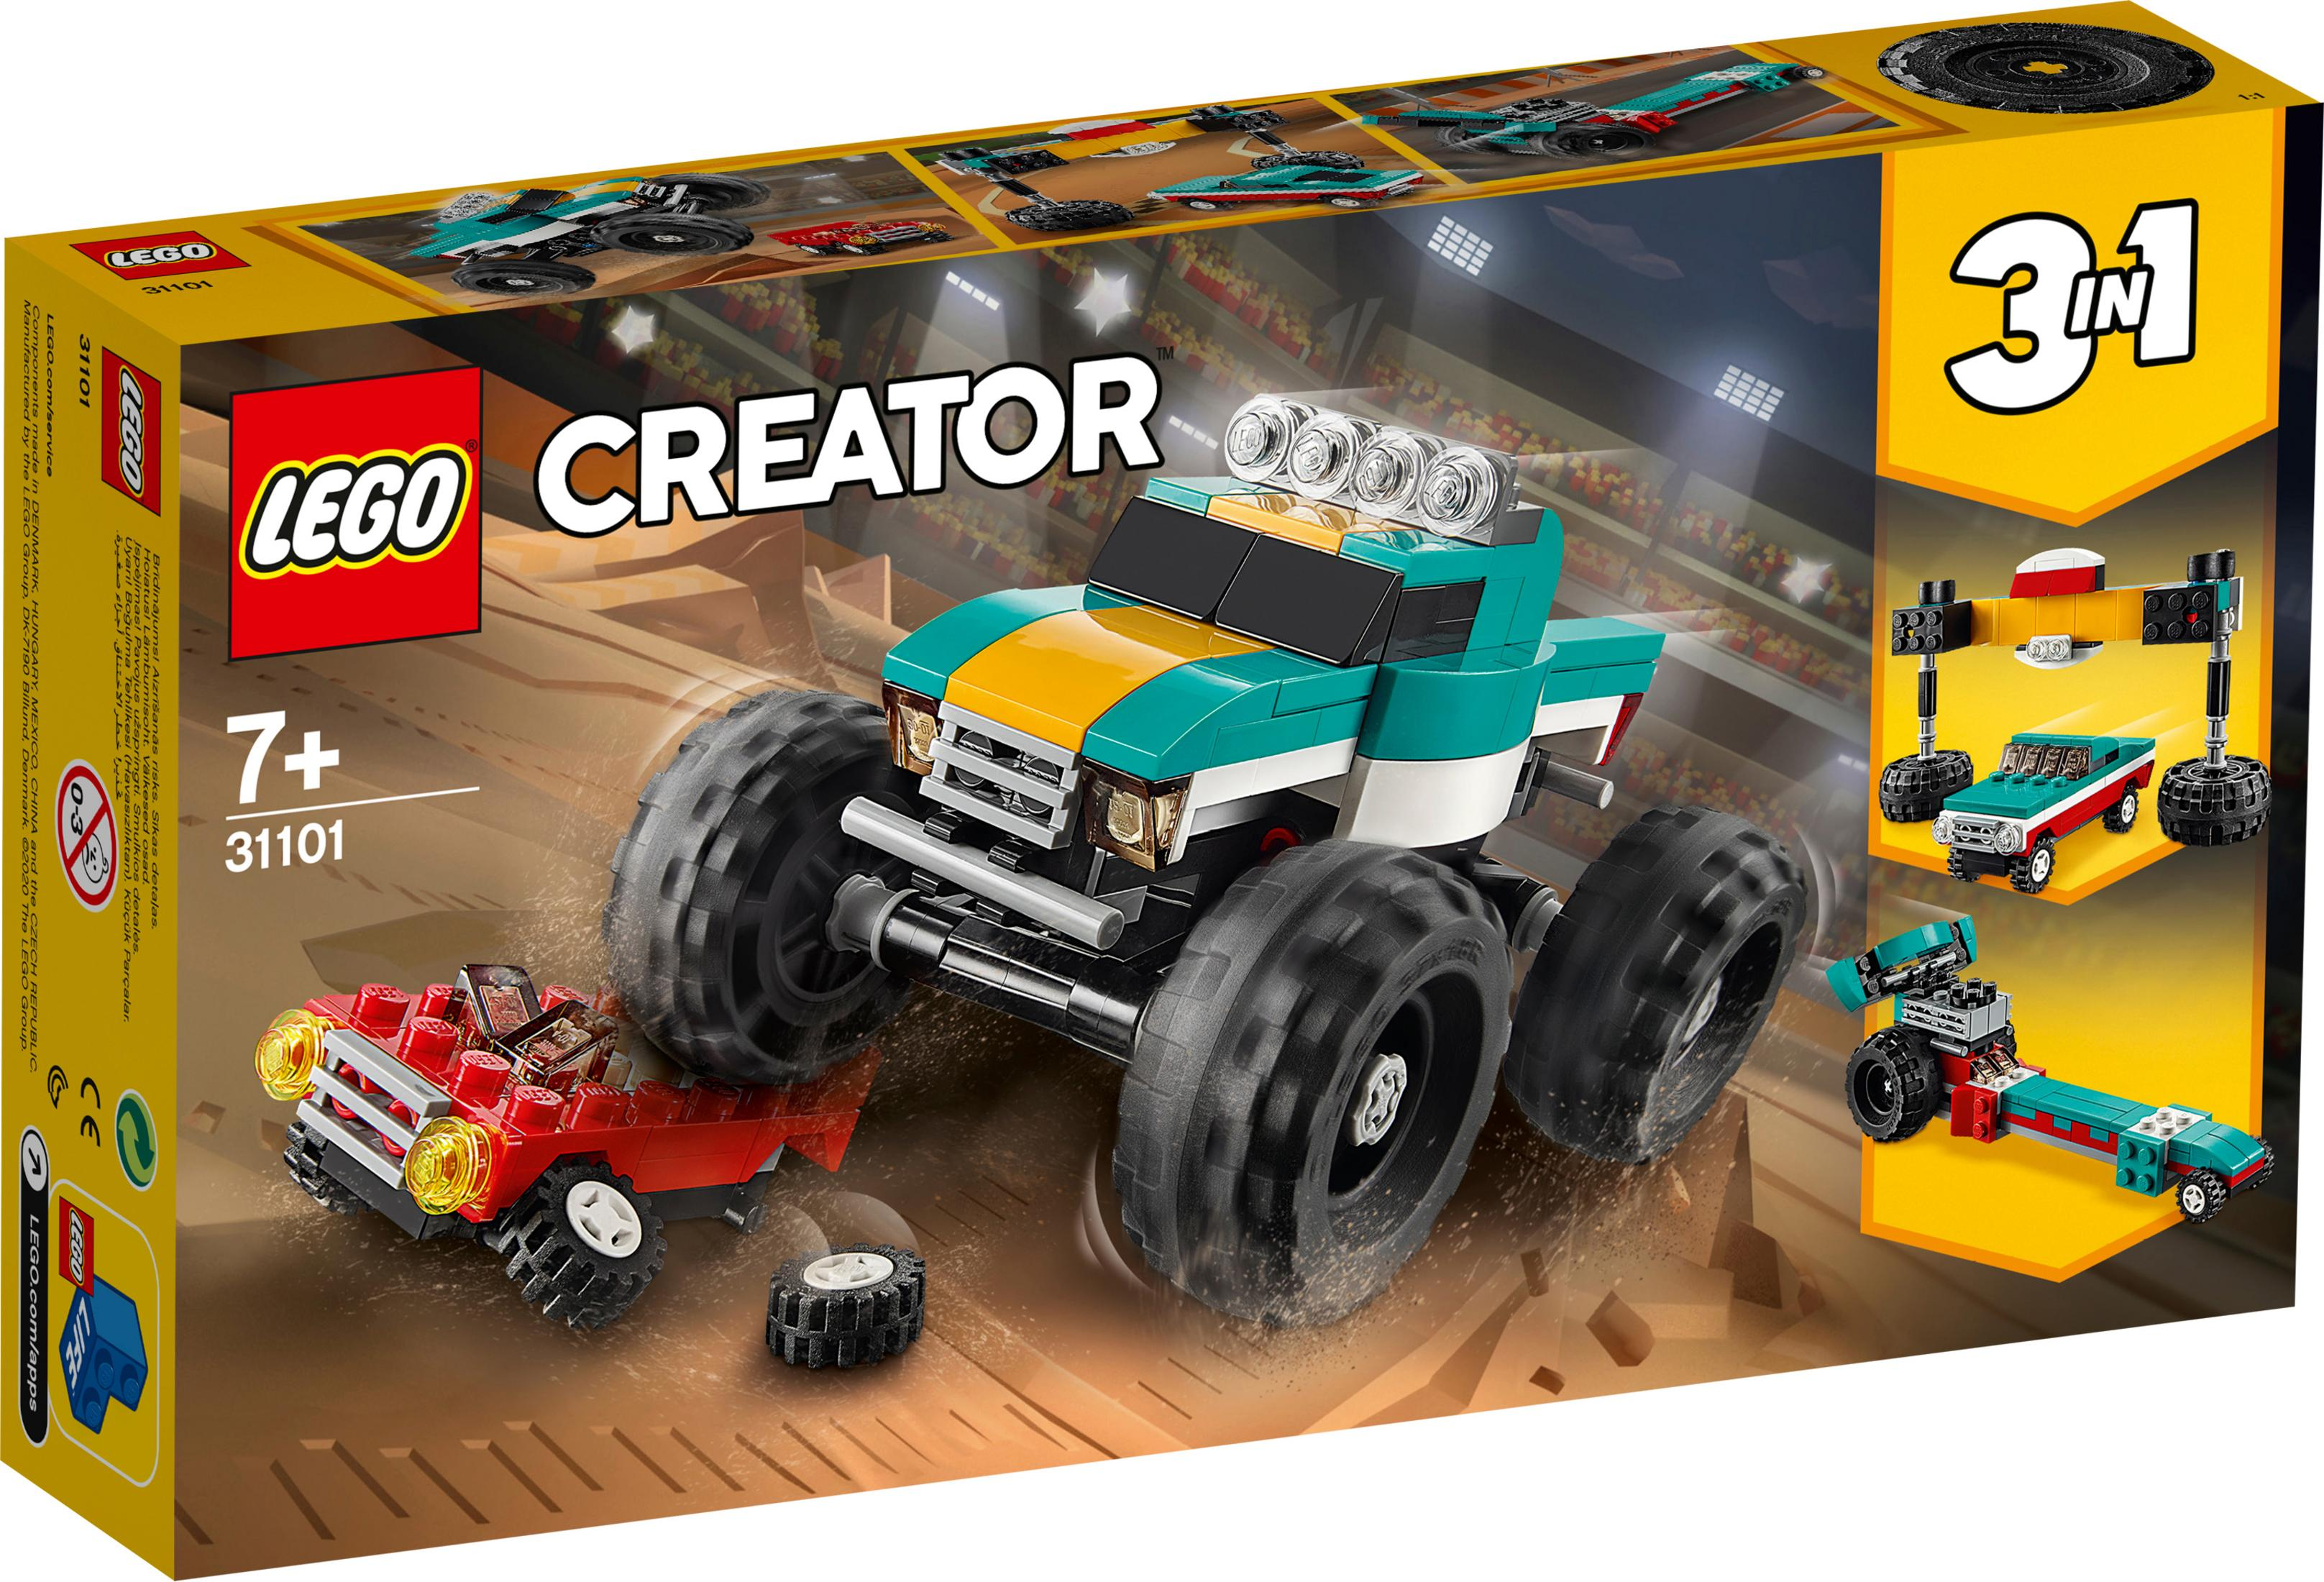 MONSTER-TRUCK LEGO Mehrfarbig Bausatz, 31101